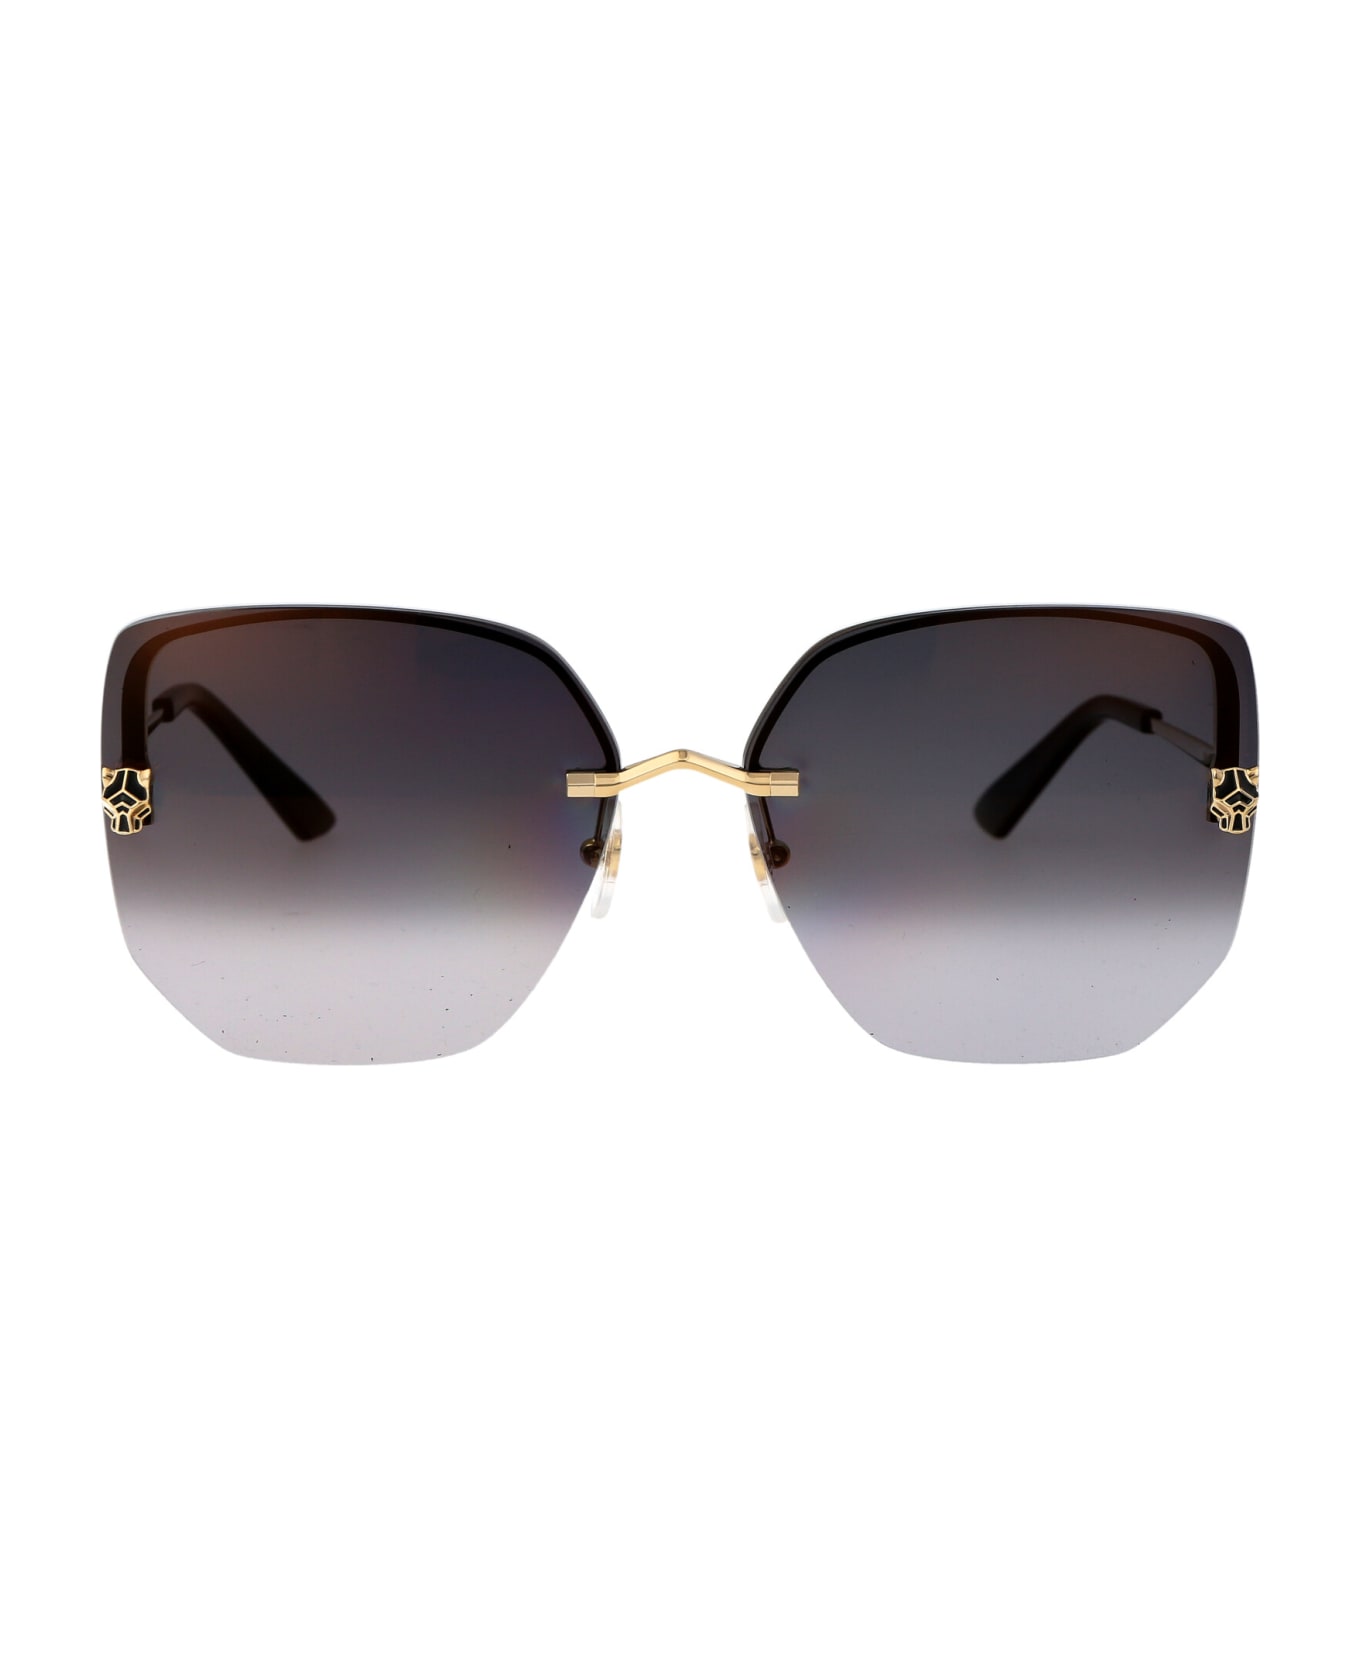 Cartier Eyewear Ct0432s Sunglasses - 001 GOLD GOLD GREY